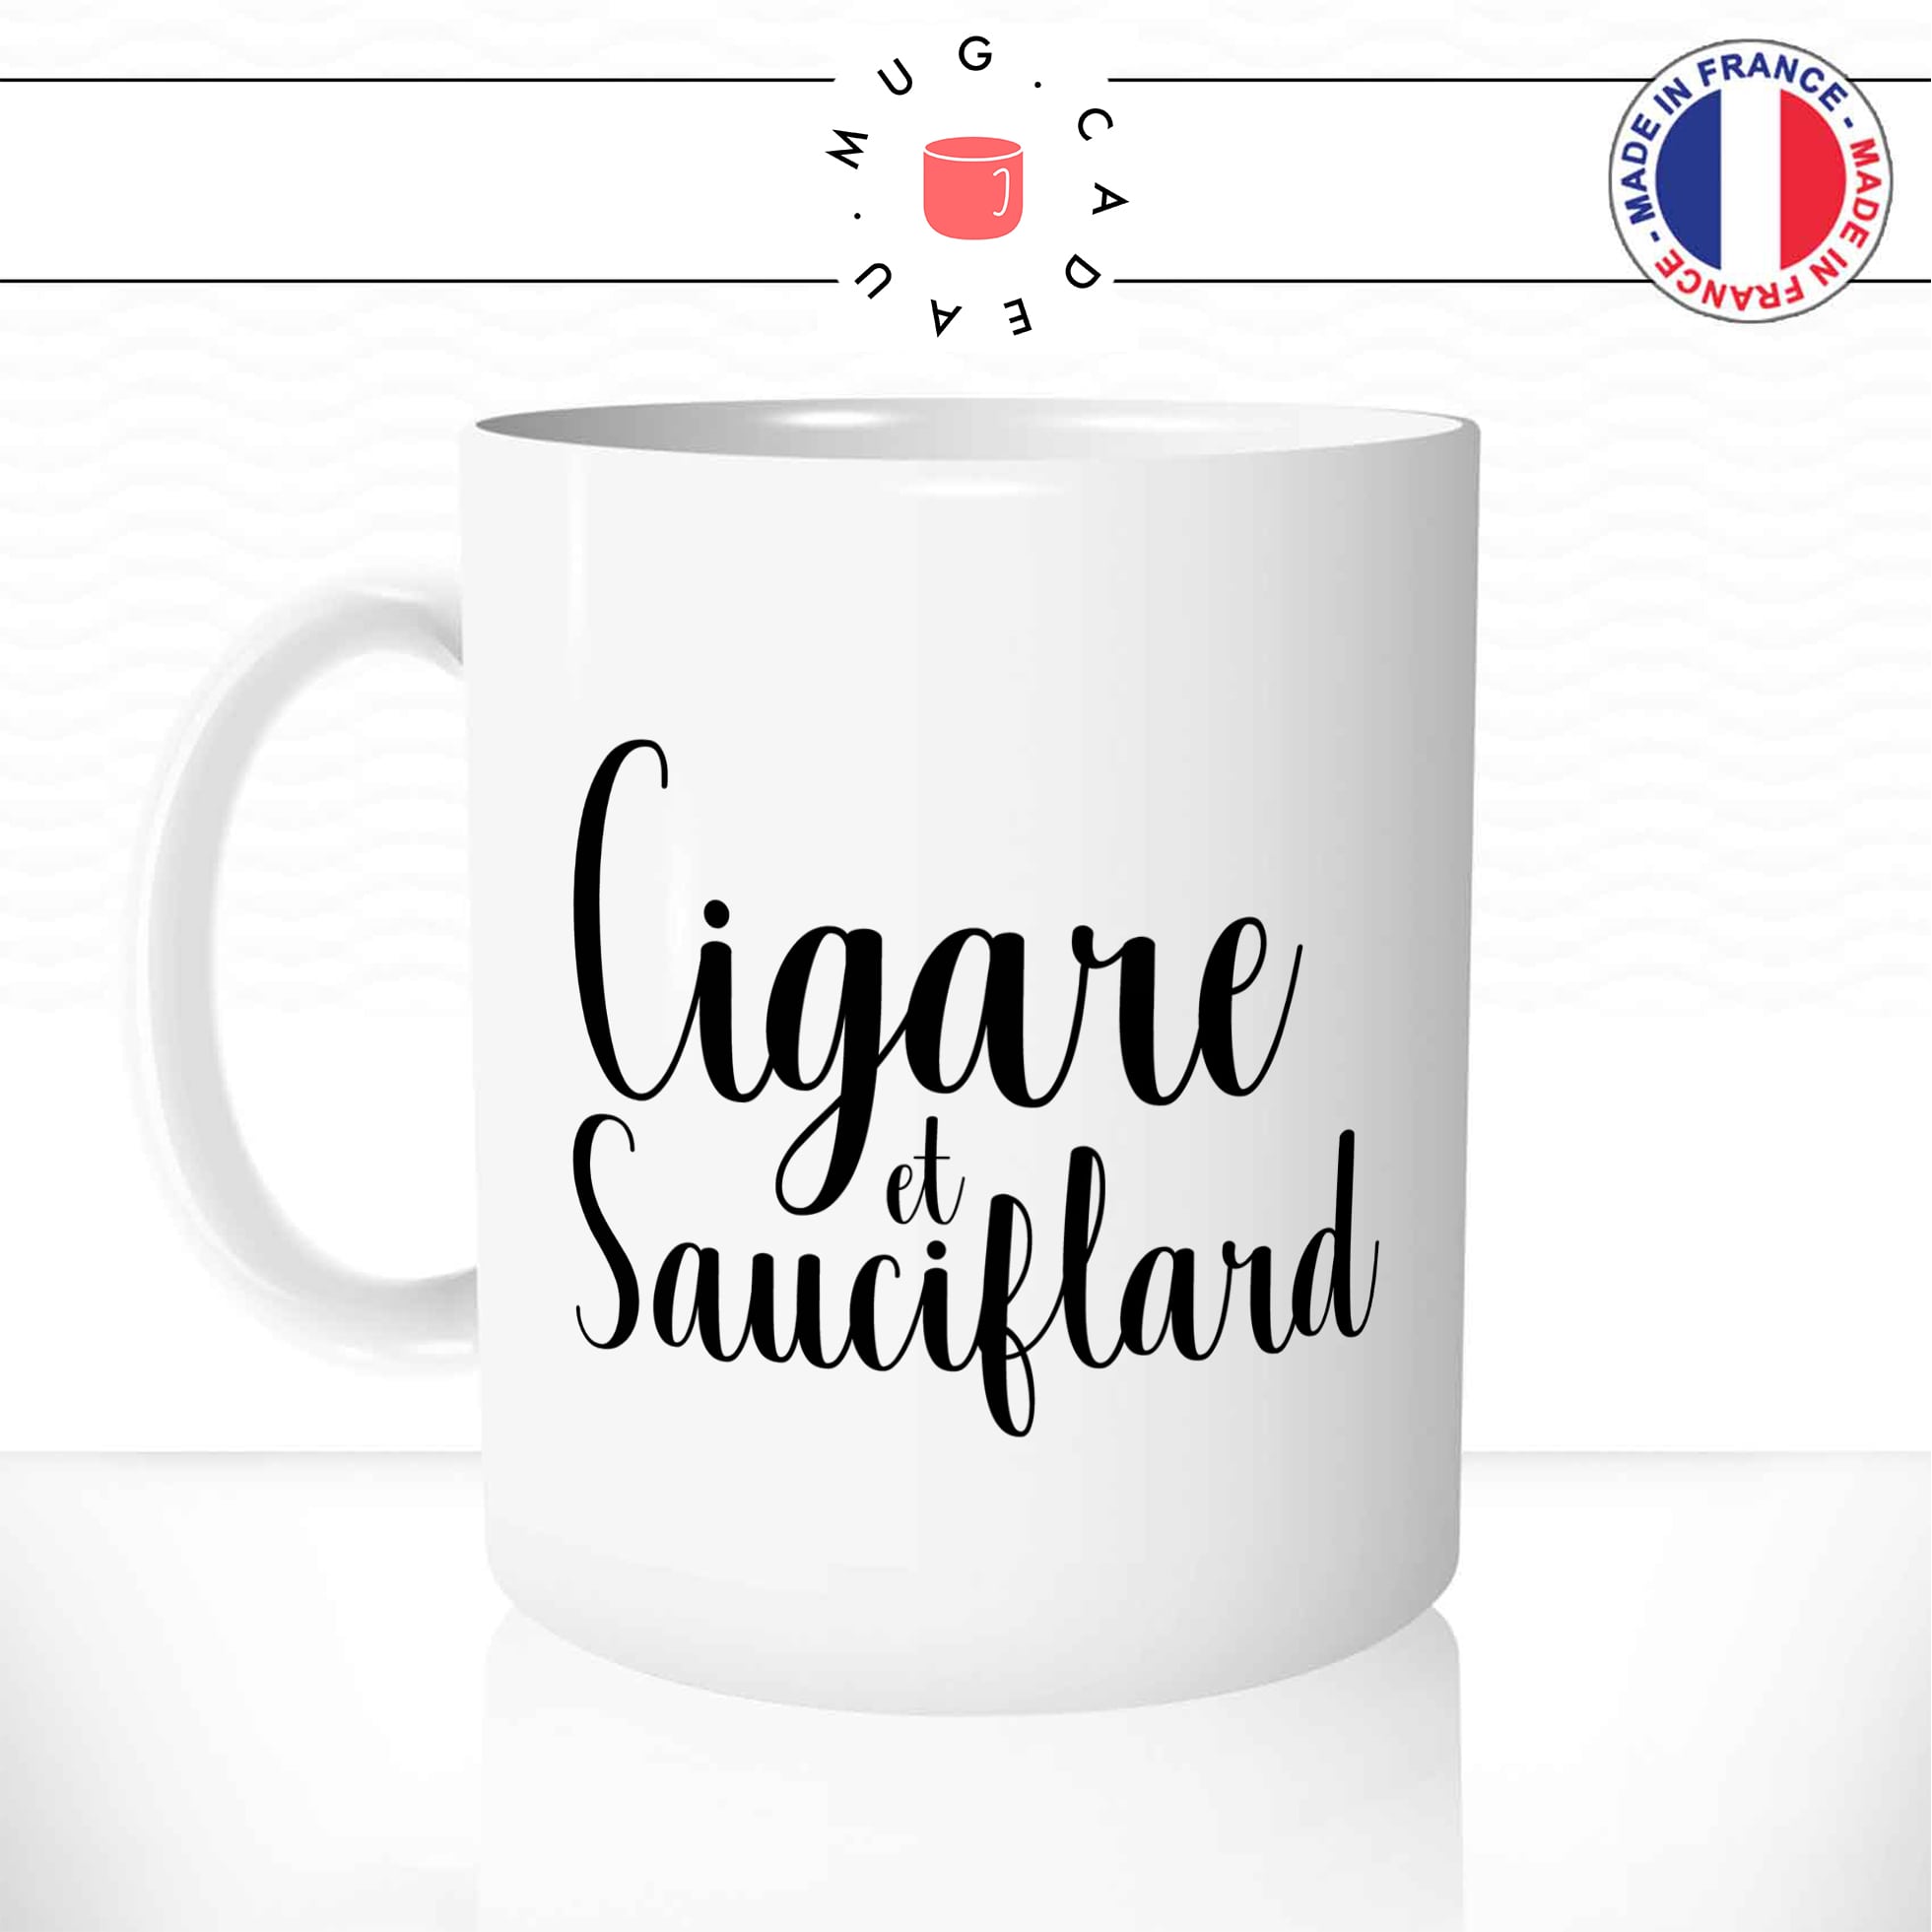 mug-tasse-cigare-sauciflard-saucisson-charcuterie-fumer-rhum-café-thé-humour-fun-idée-cadeau-original-personnalisée-min